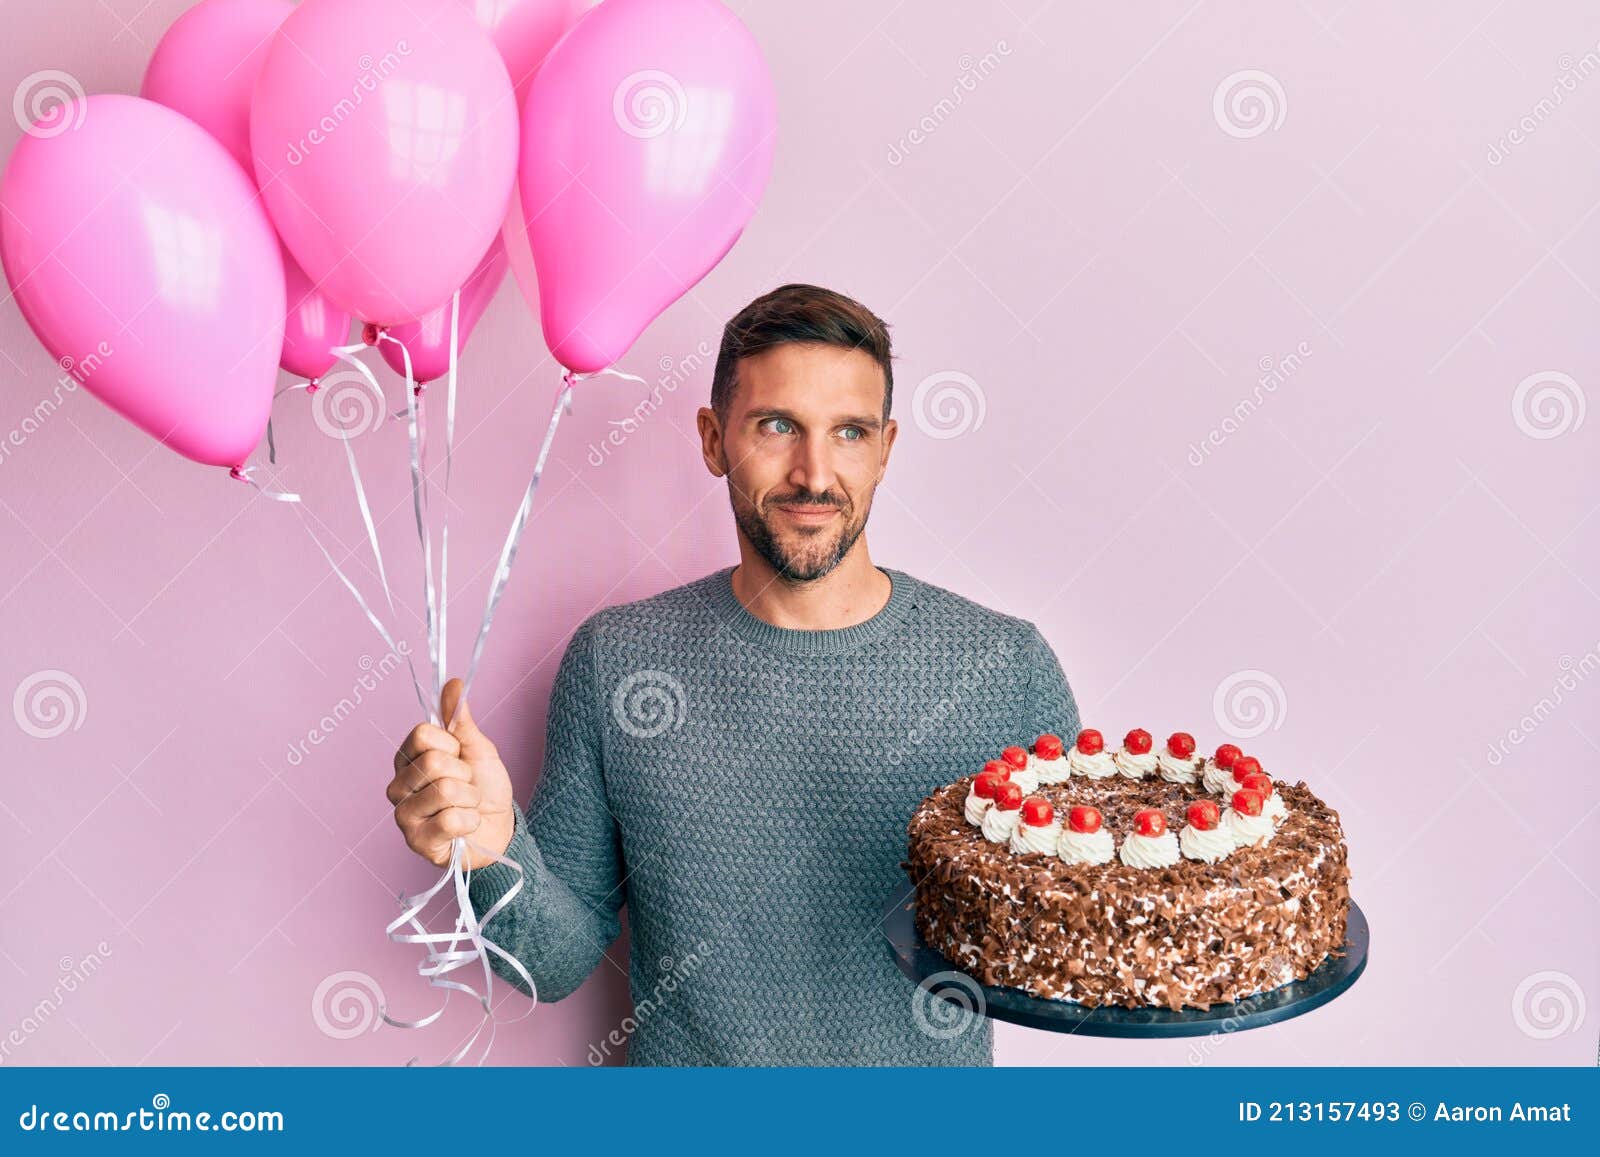 Beard cake | Beard cake, Cake for husband, Birthday cake for him